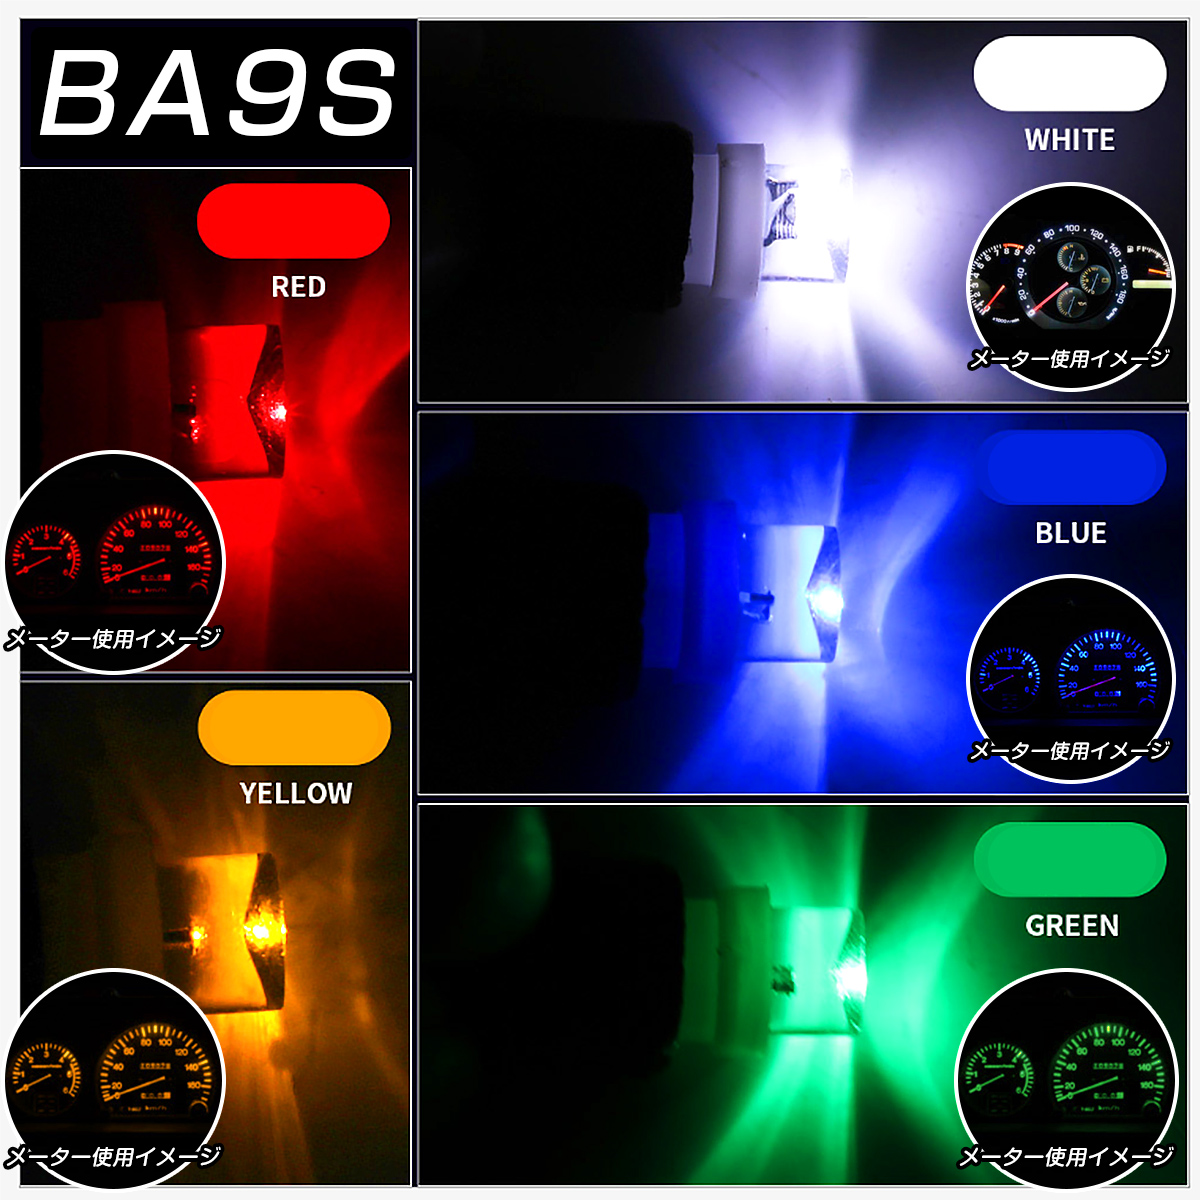 LED 口金 BA9S 緑 メーター球 タコランプ インジケーター エアコンパネル 超拡散 全面発光 2個セット SDM便送料無料 1ヶ月保証